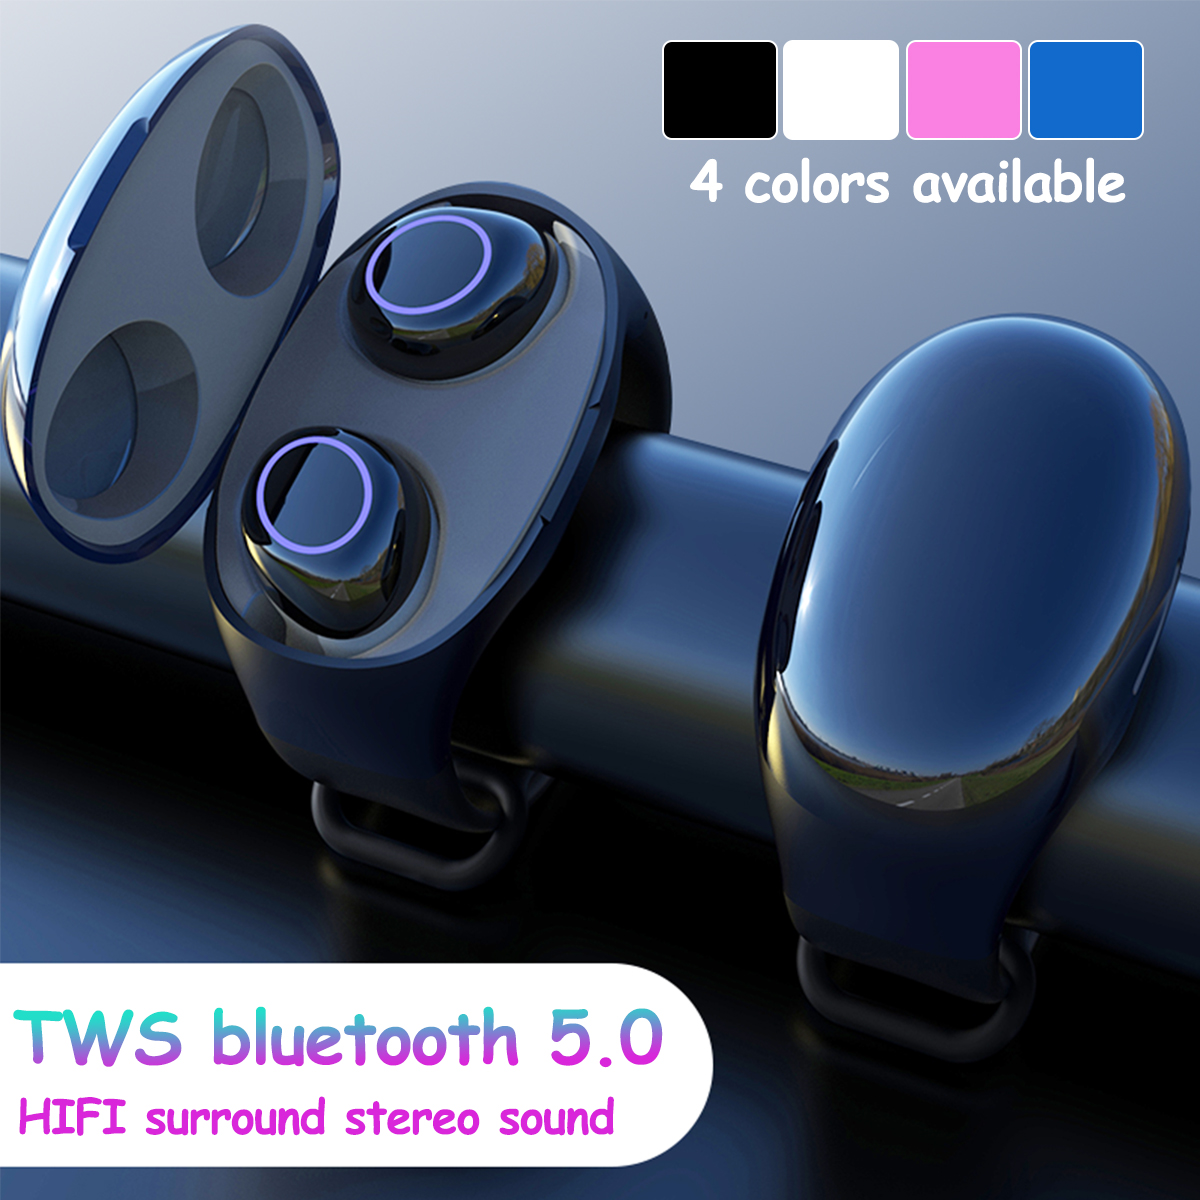 TWS-Wireless-bluetooth-50-Wrist-Earphone-Power-Bank-Smart-Touch-LED-Display-HIFI-Headphone-With-Char-1553620-2